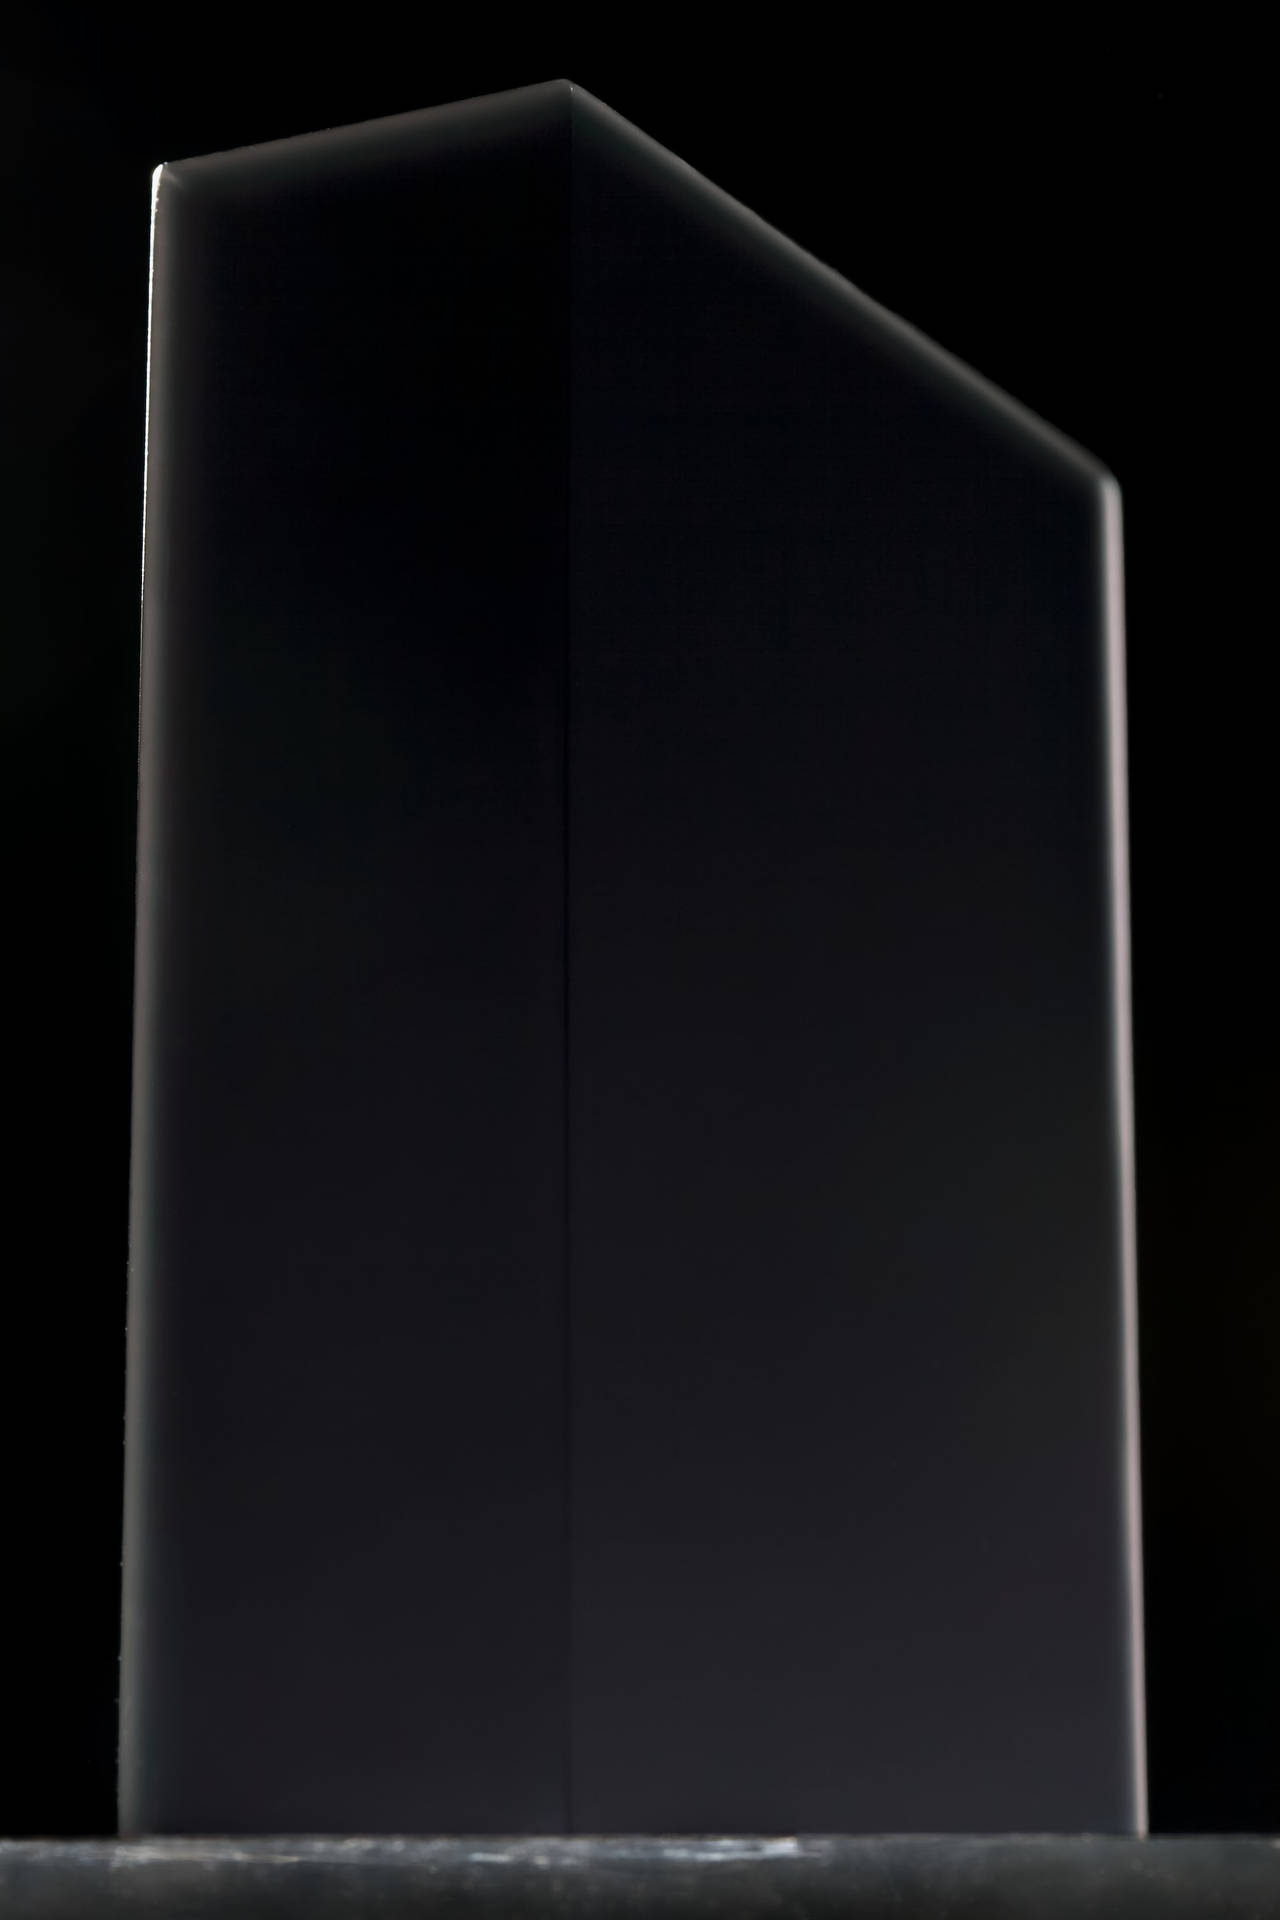 Monolith Black Aesthetic Tumblr Iphone Wallpaper